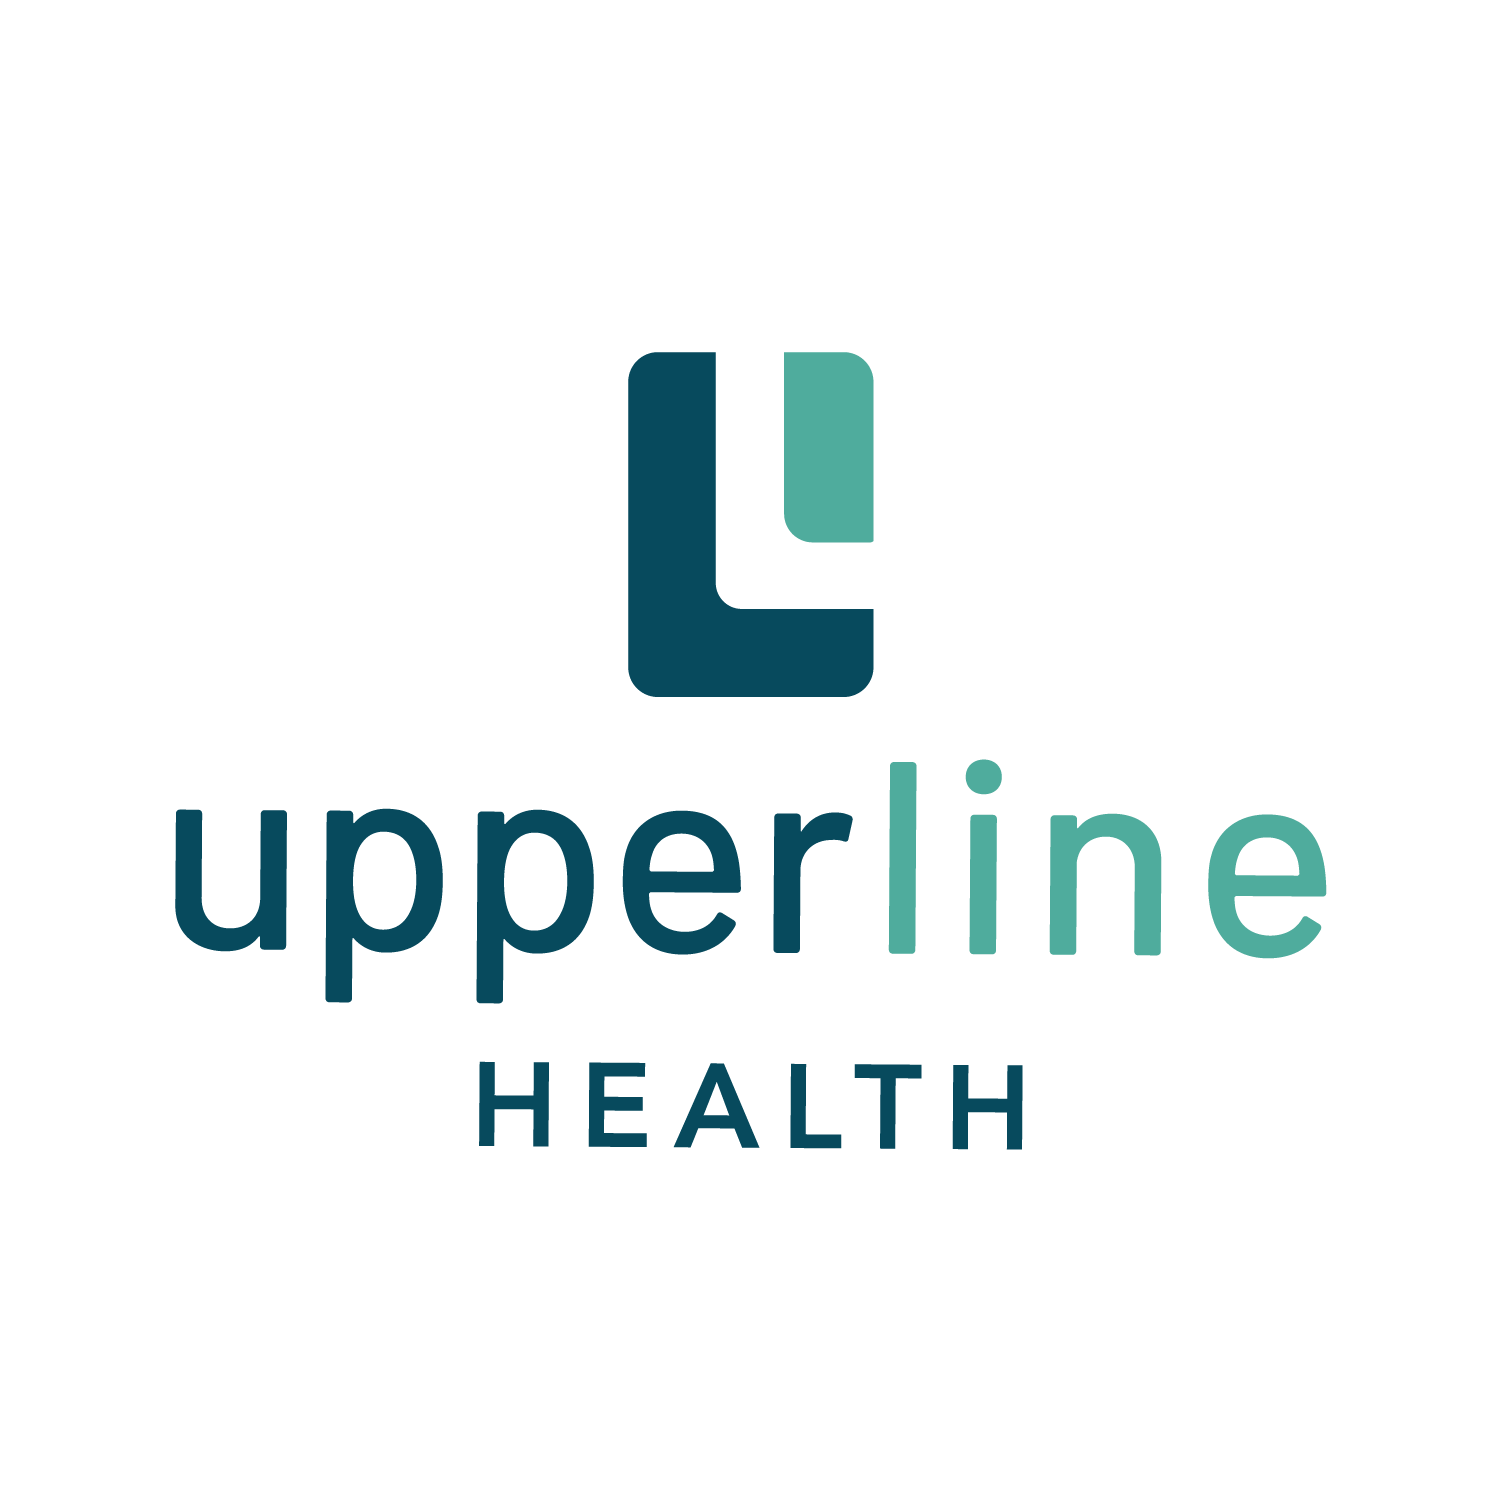 Upperline Health